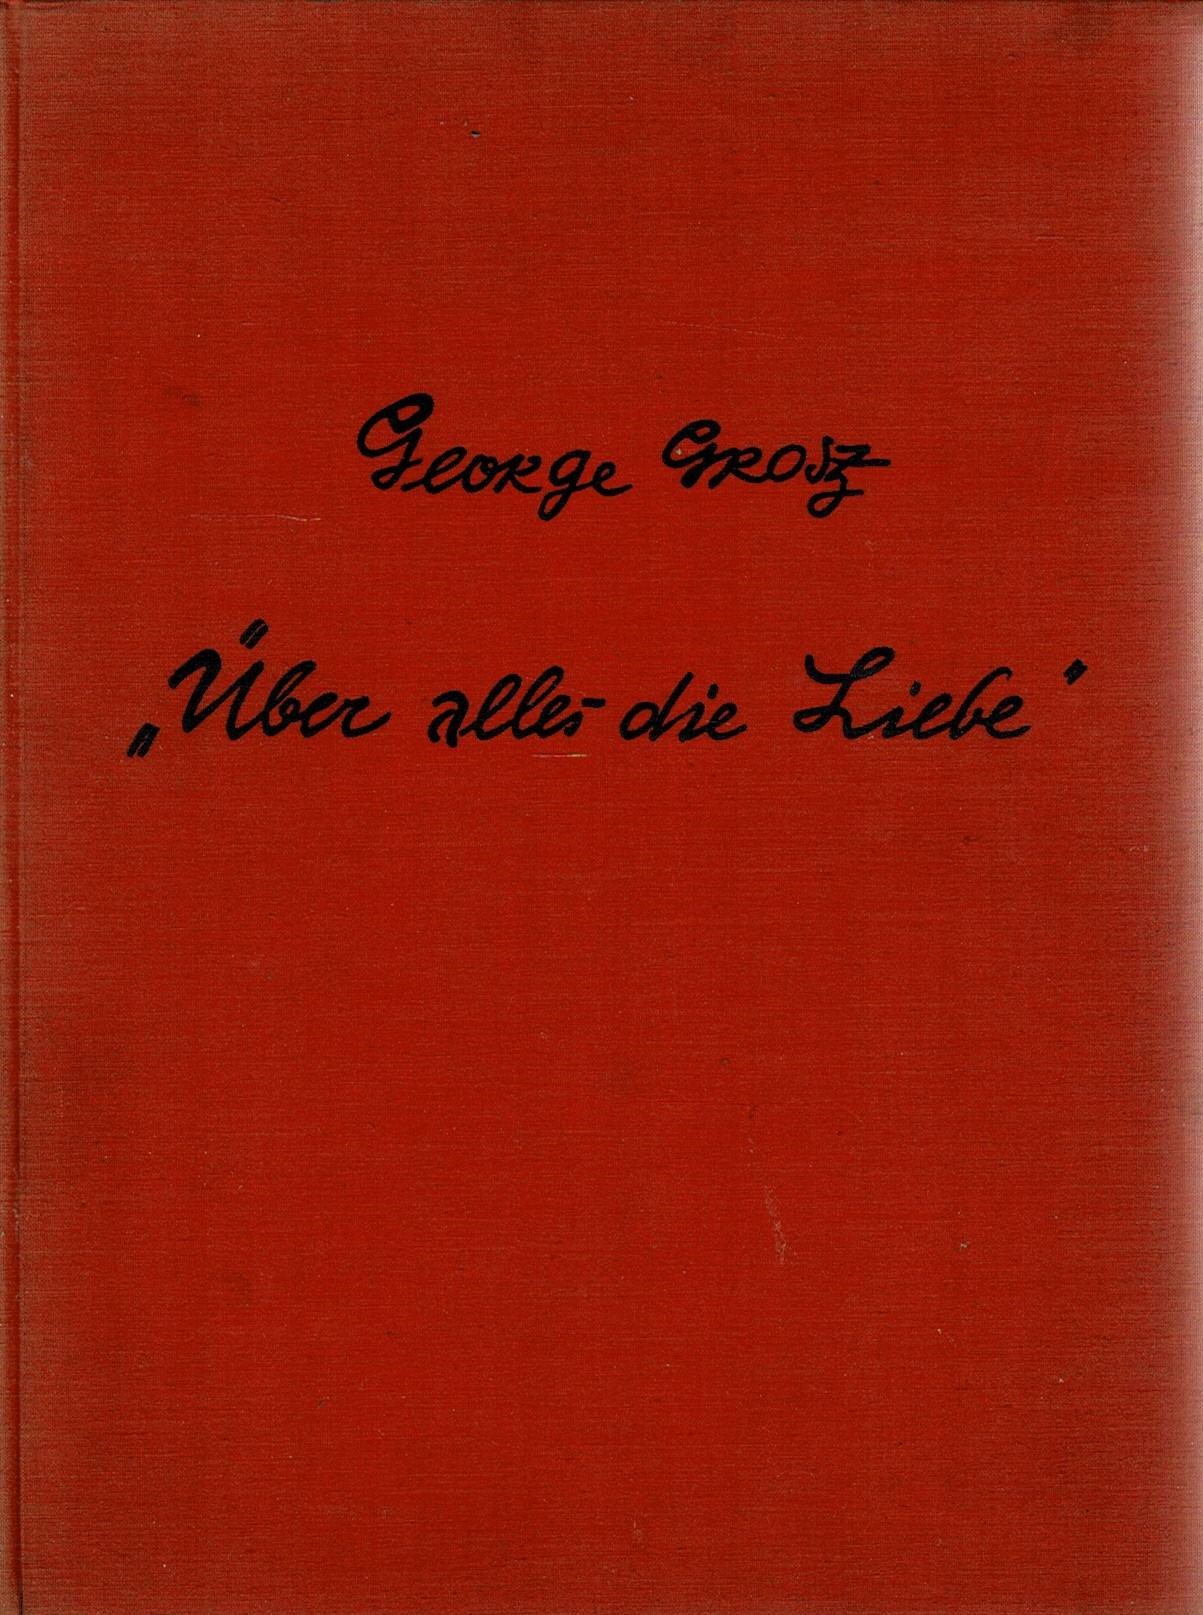 Grosz, George: Über alles die Liebe